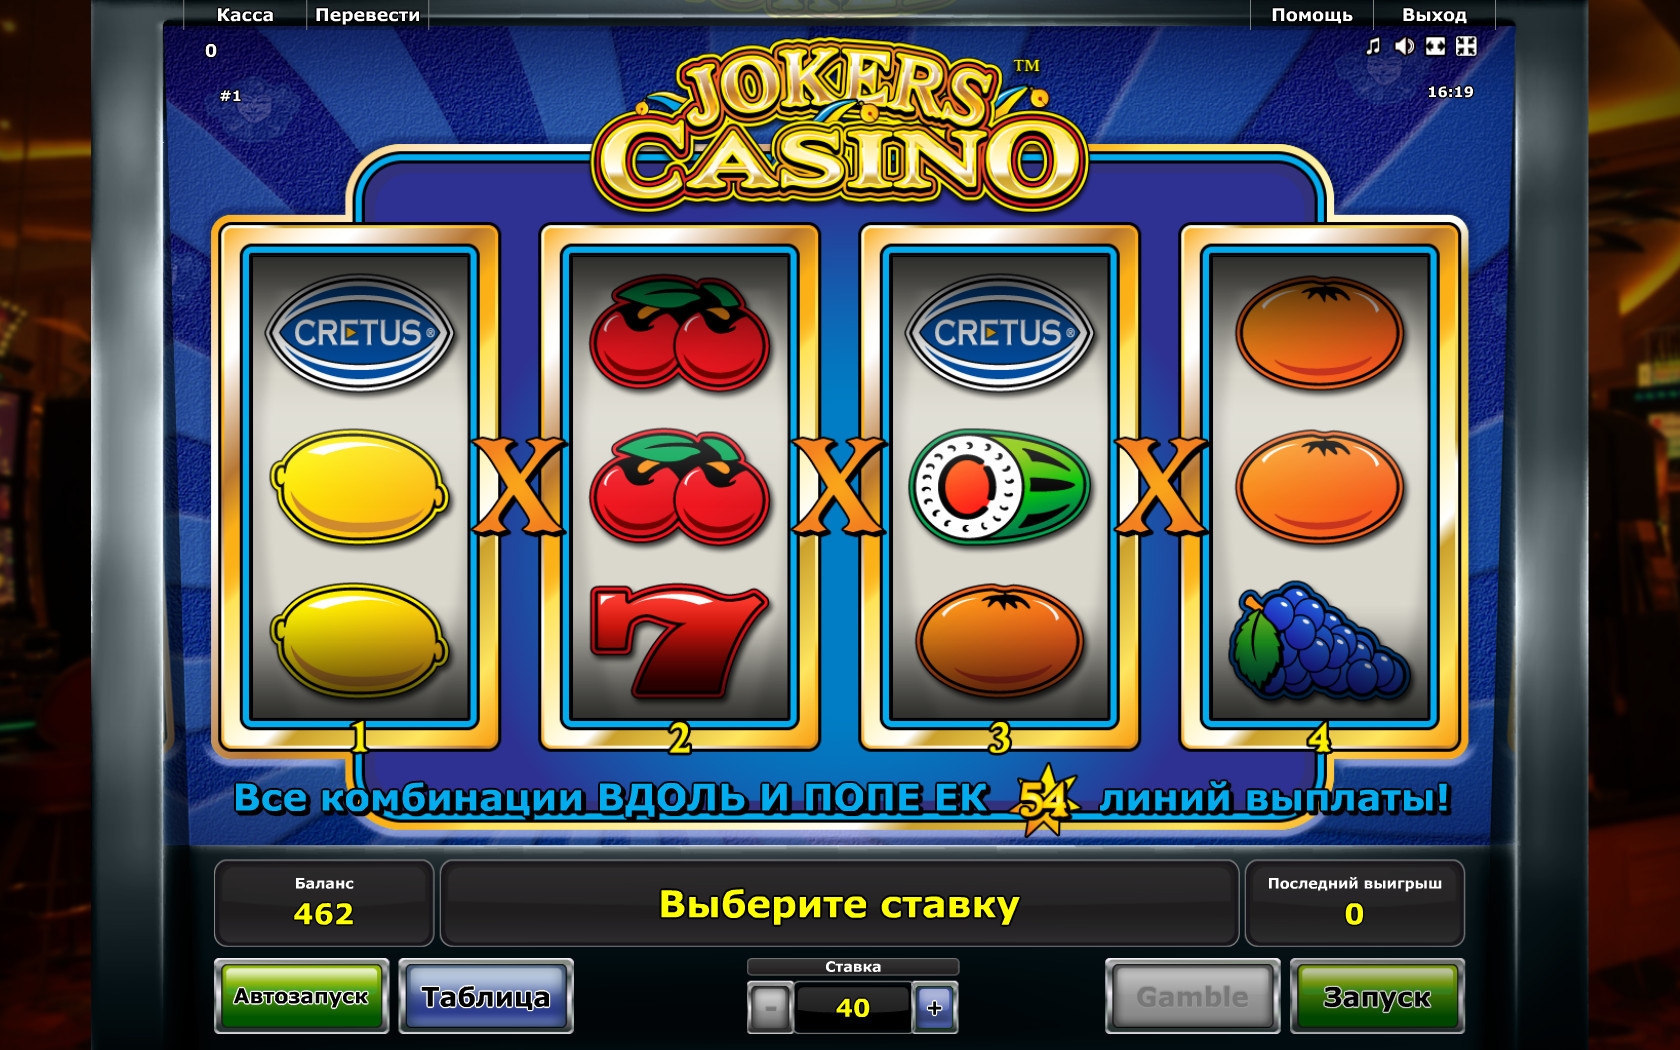 Jokers Casino (Jokers Casino) from category Slots